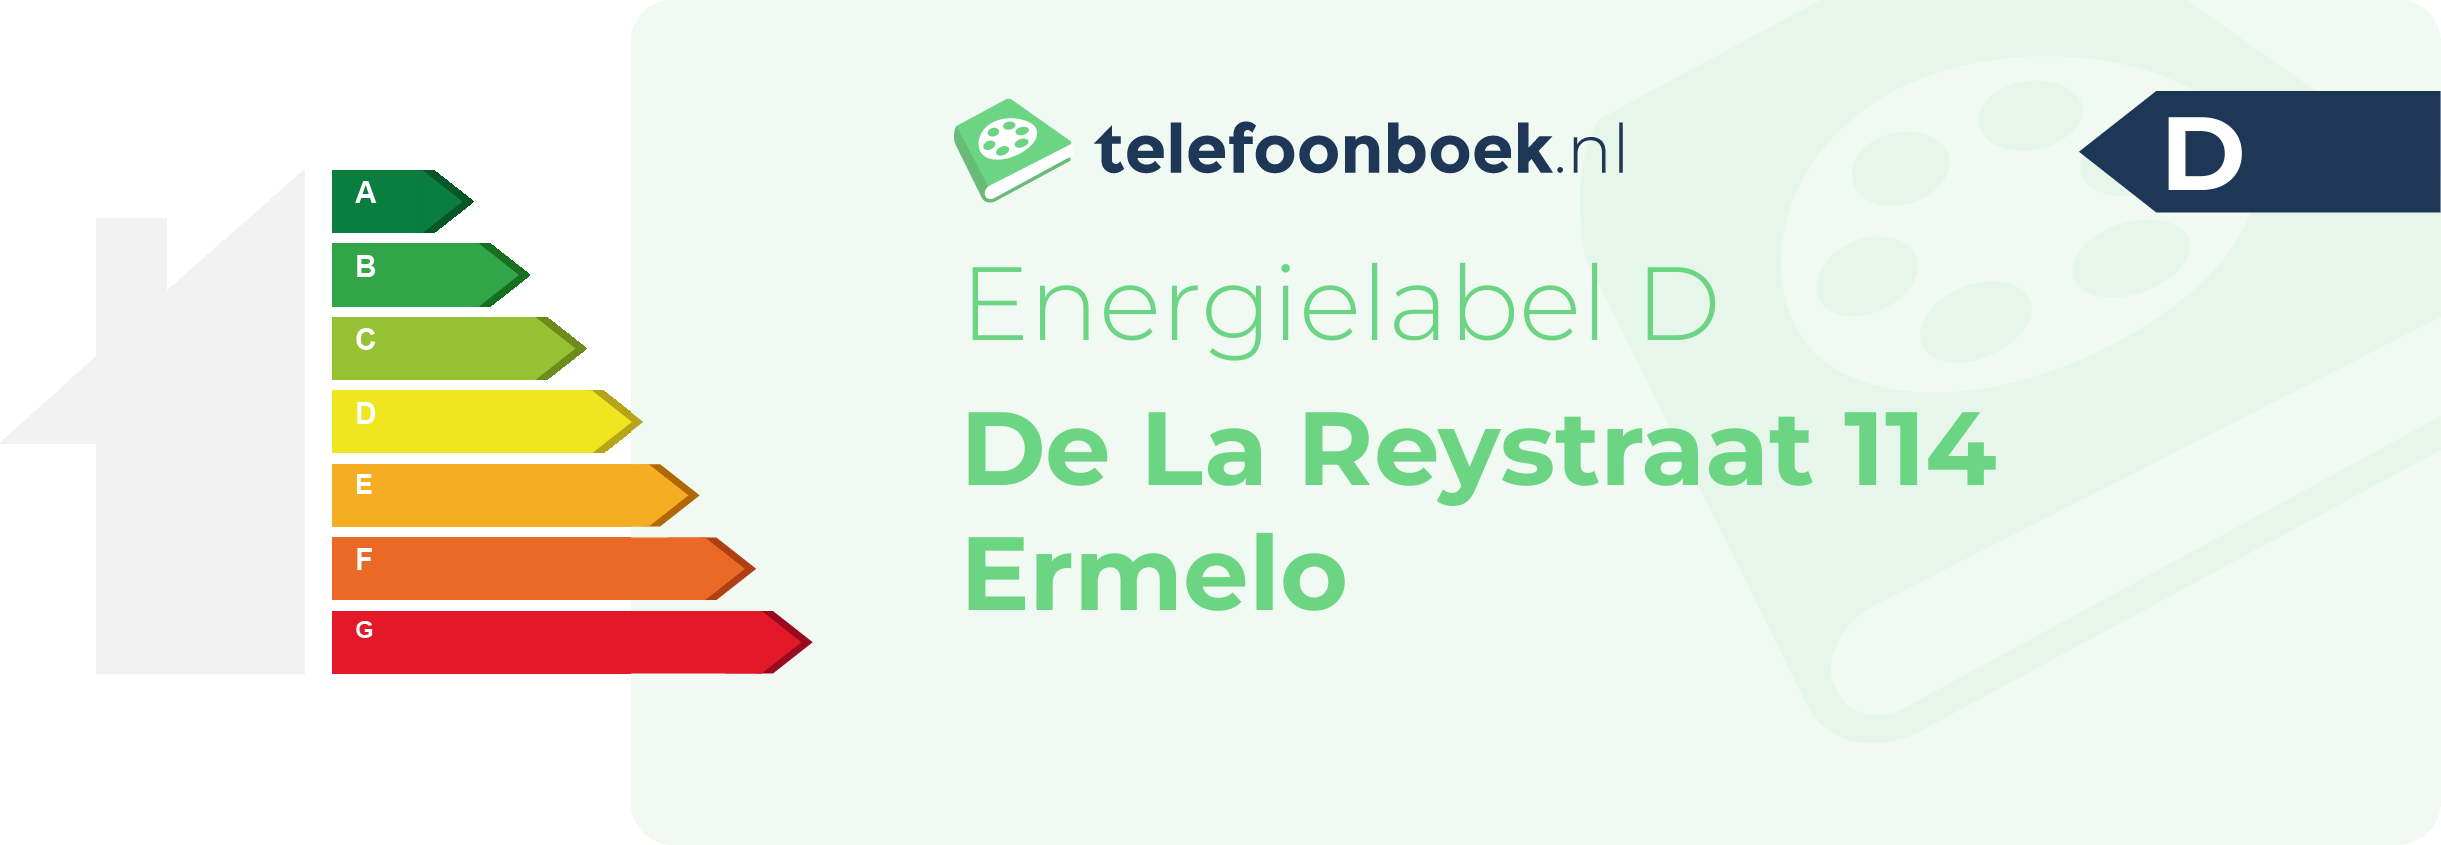 Energielabel De La Reystraat 114 Ermelo